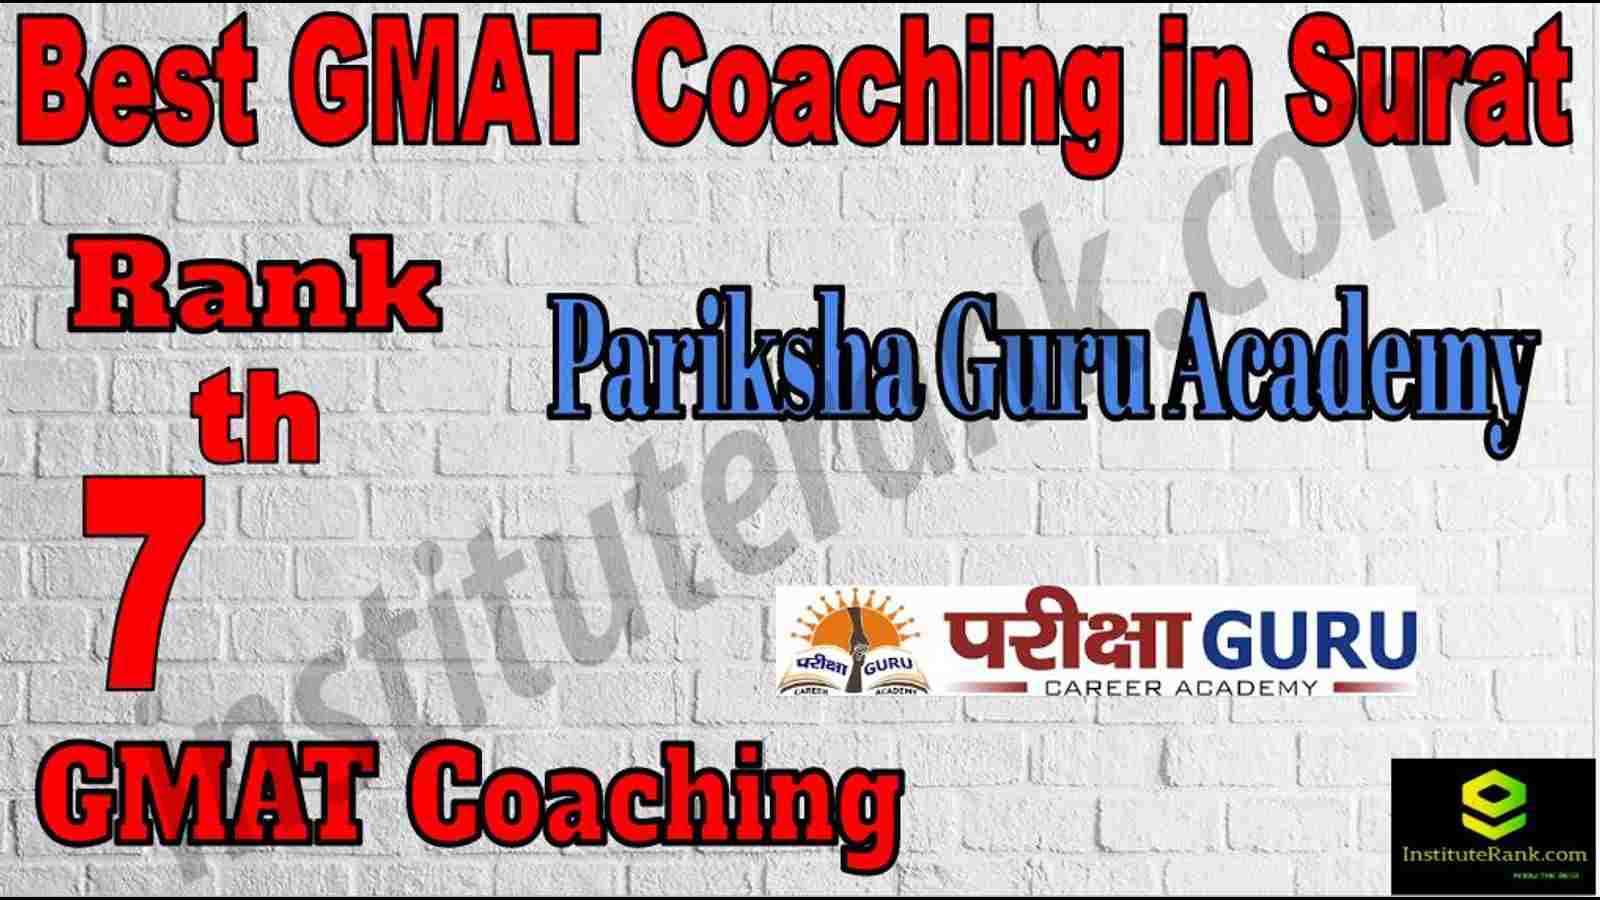 7th Best GMAT Coaching in Surat